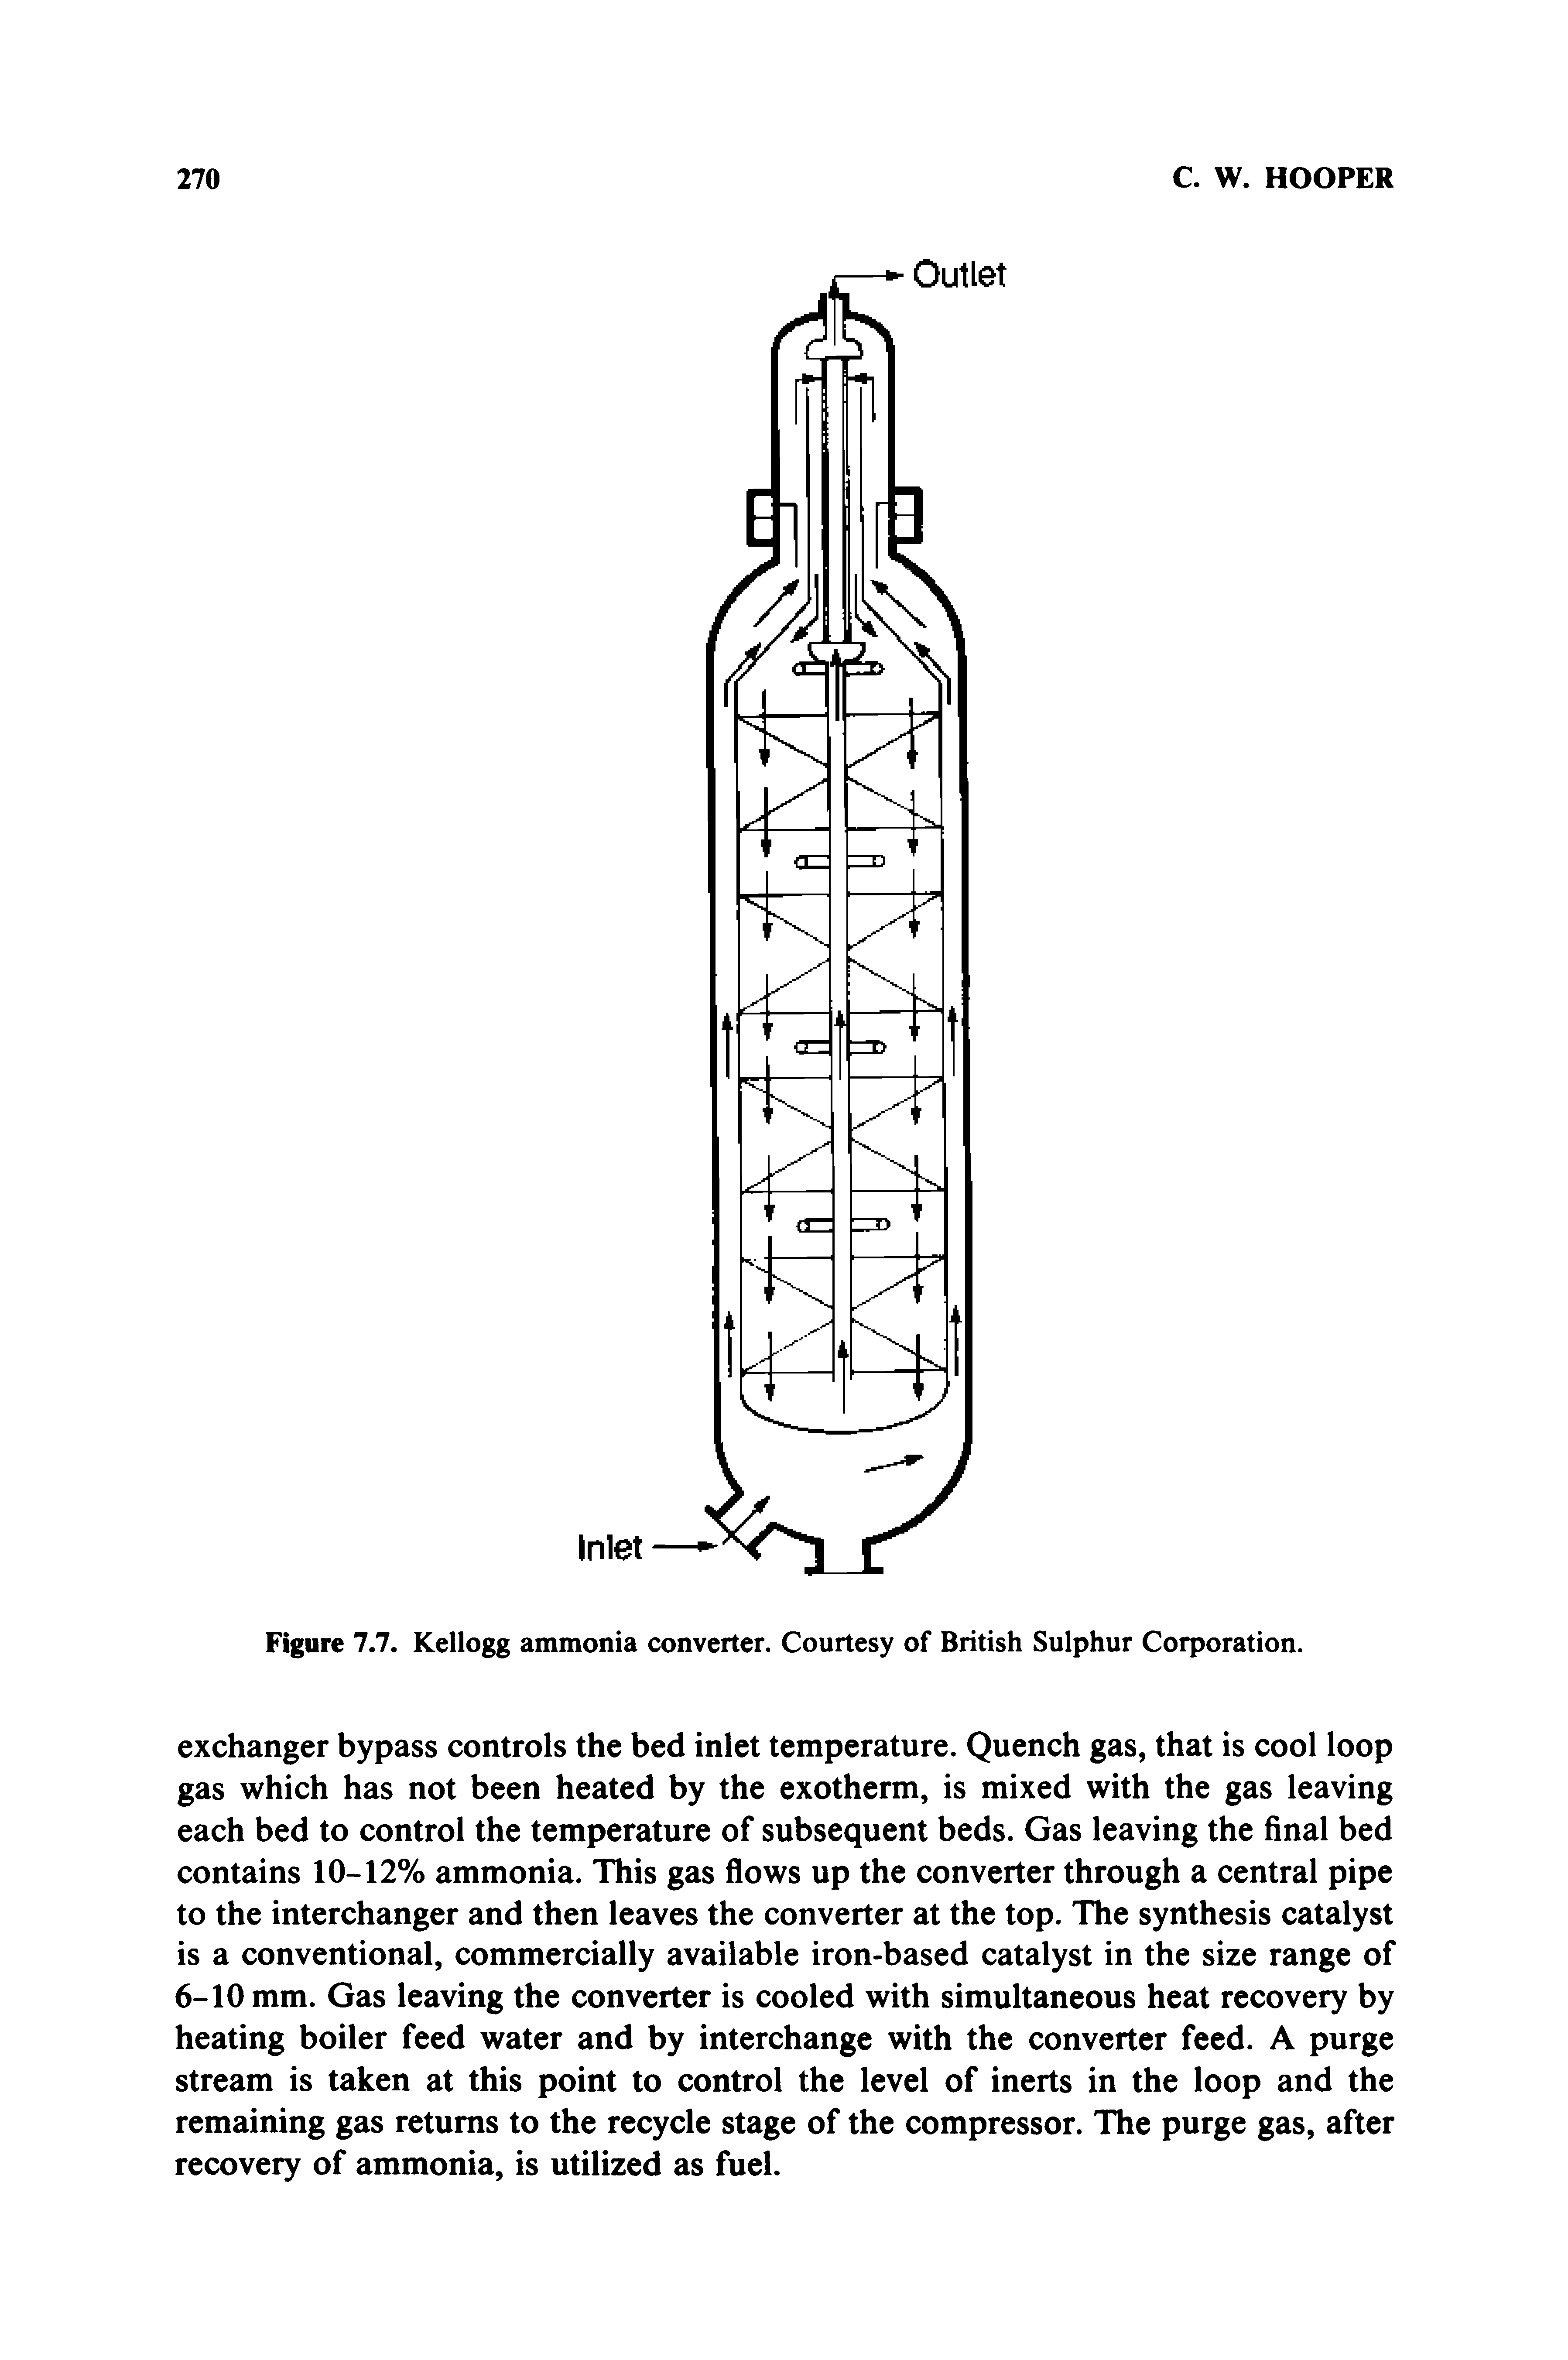 Figure 7.7. Kellogg ammonia converter. Courtesy of British Sulphur Corporation.